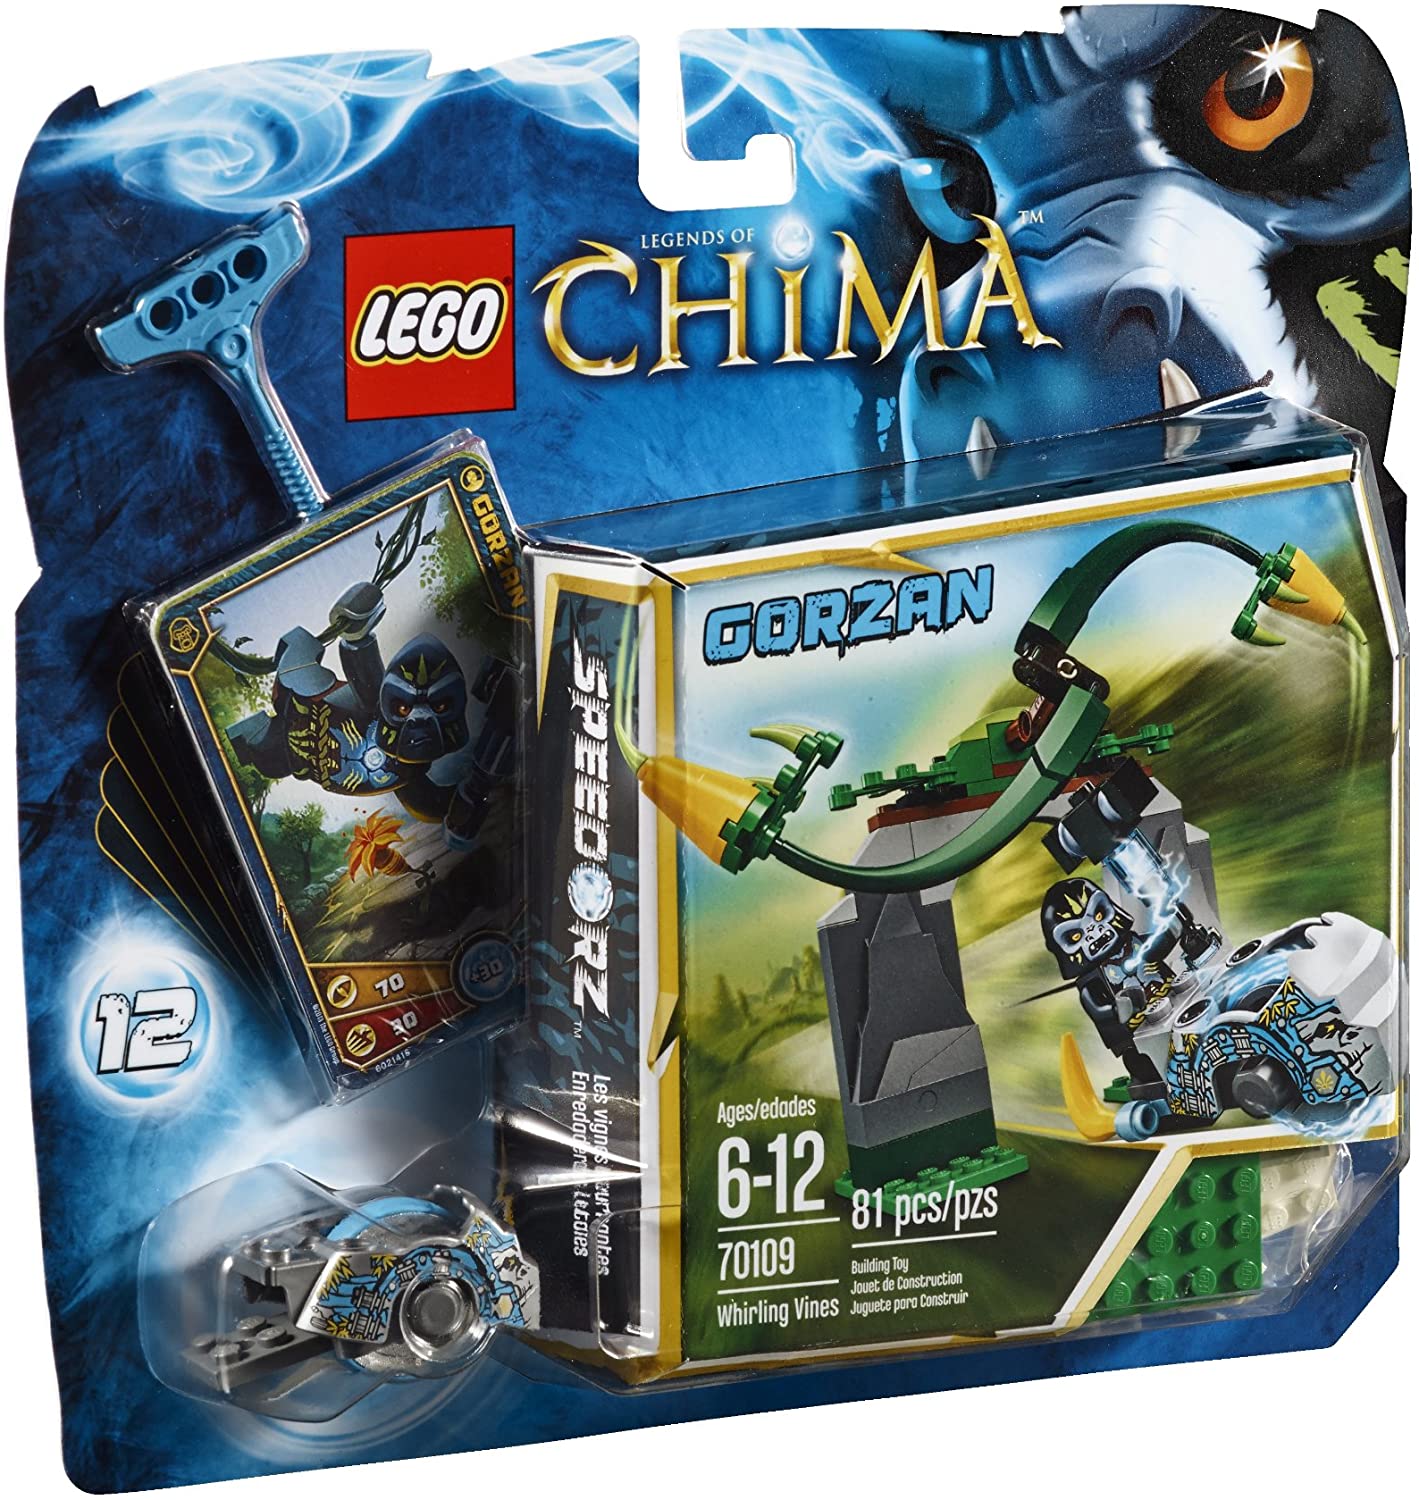 70109 Whirling Vines | LEGO Legends of Chima Wiki | Fandom